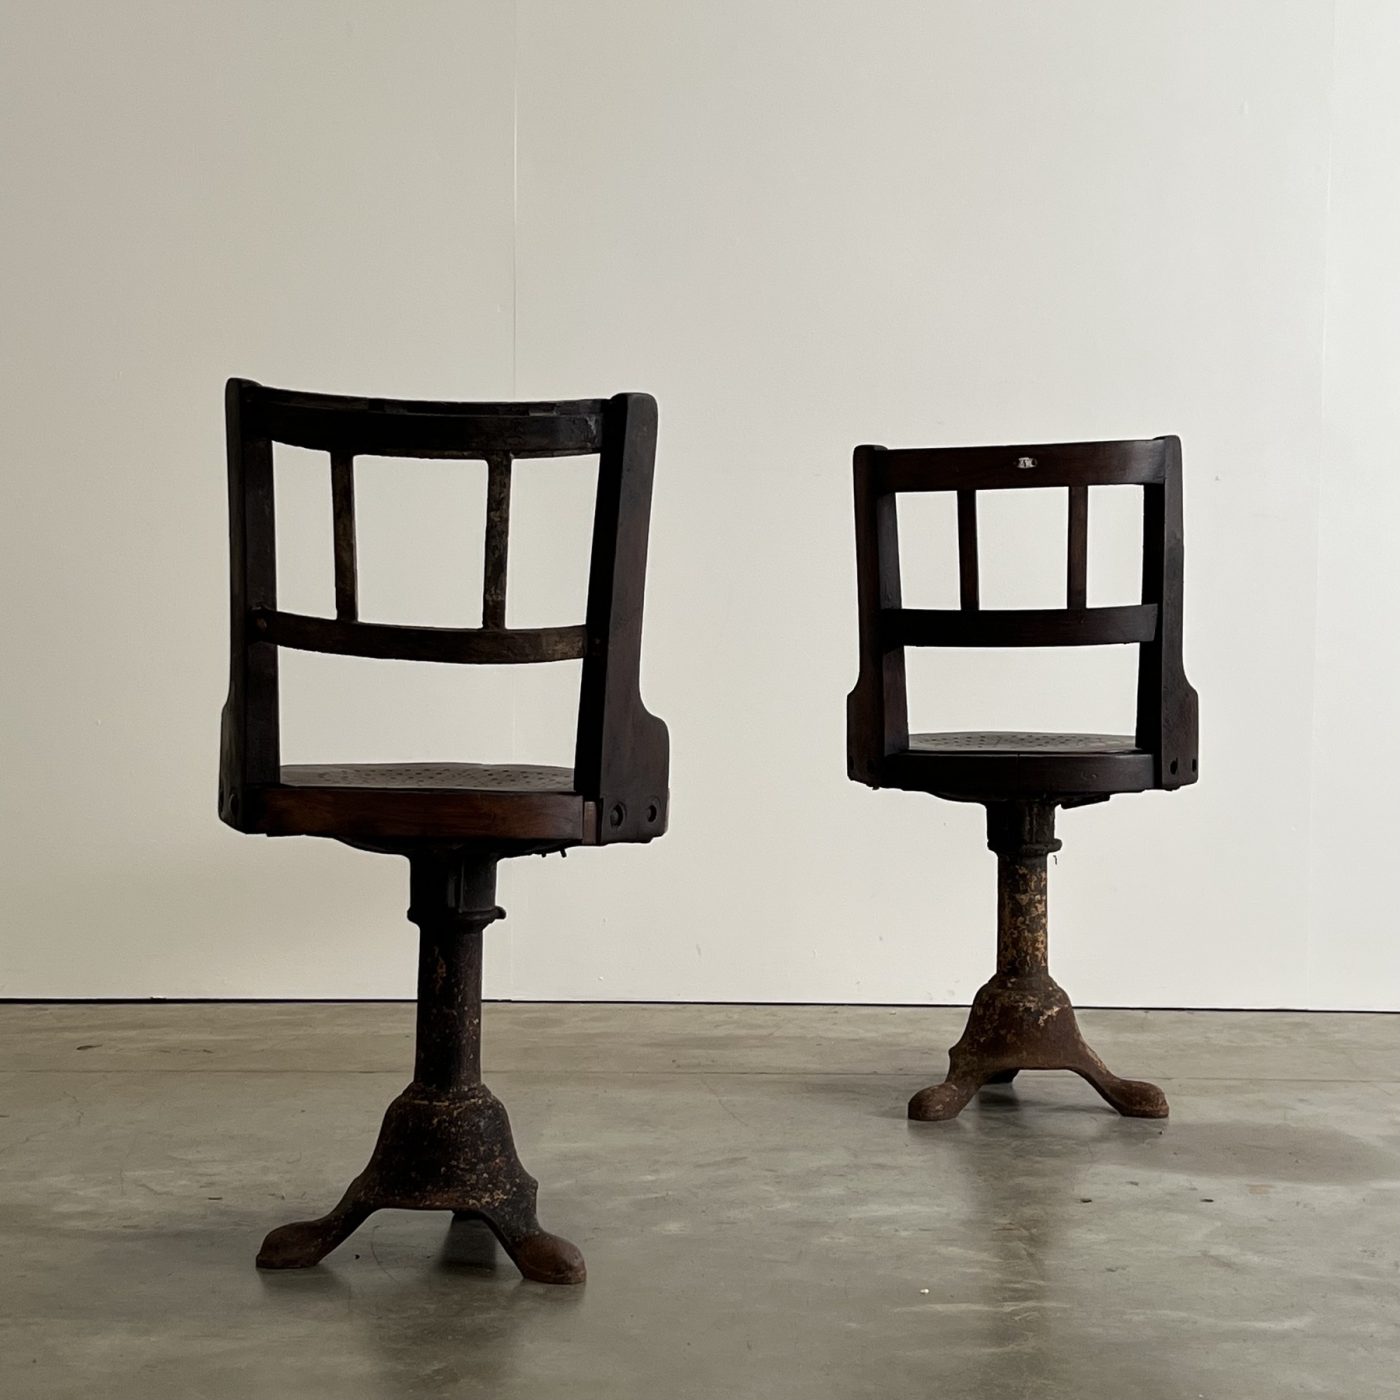 objet-vagabond-boat-chairs0006